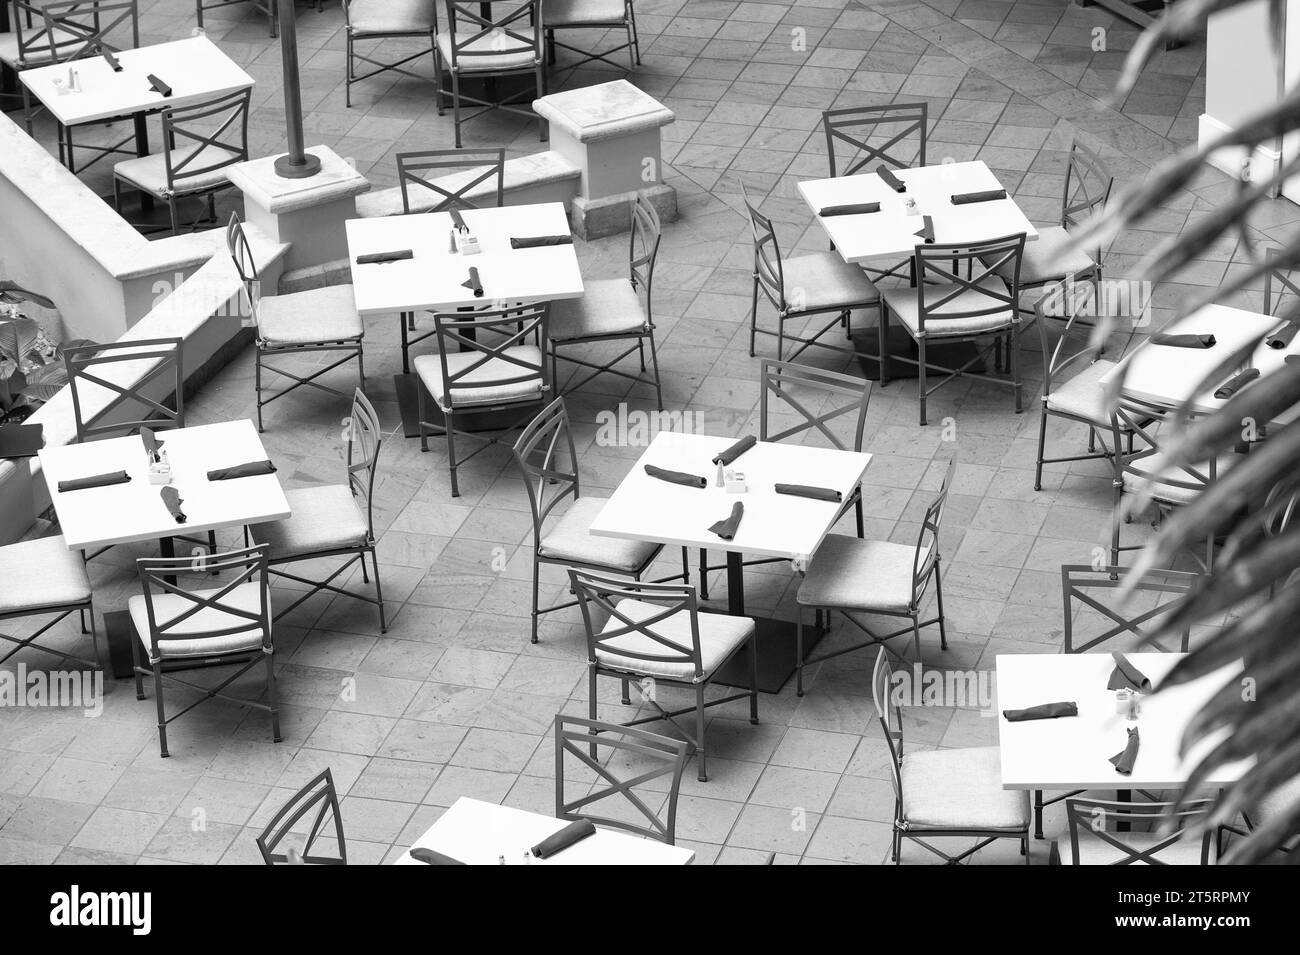 Empty outdoor cafe or restarant. Cafe restaurant furniture set in patio terrace backyard Stock Photo